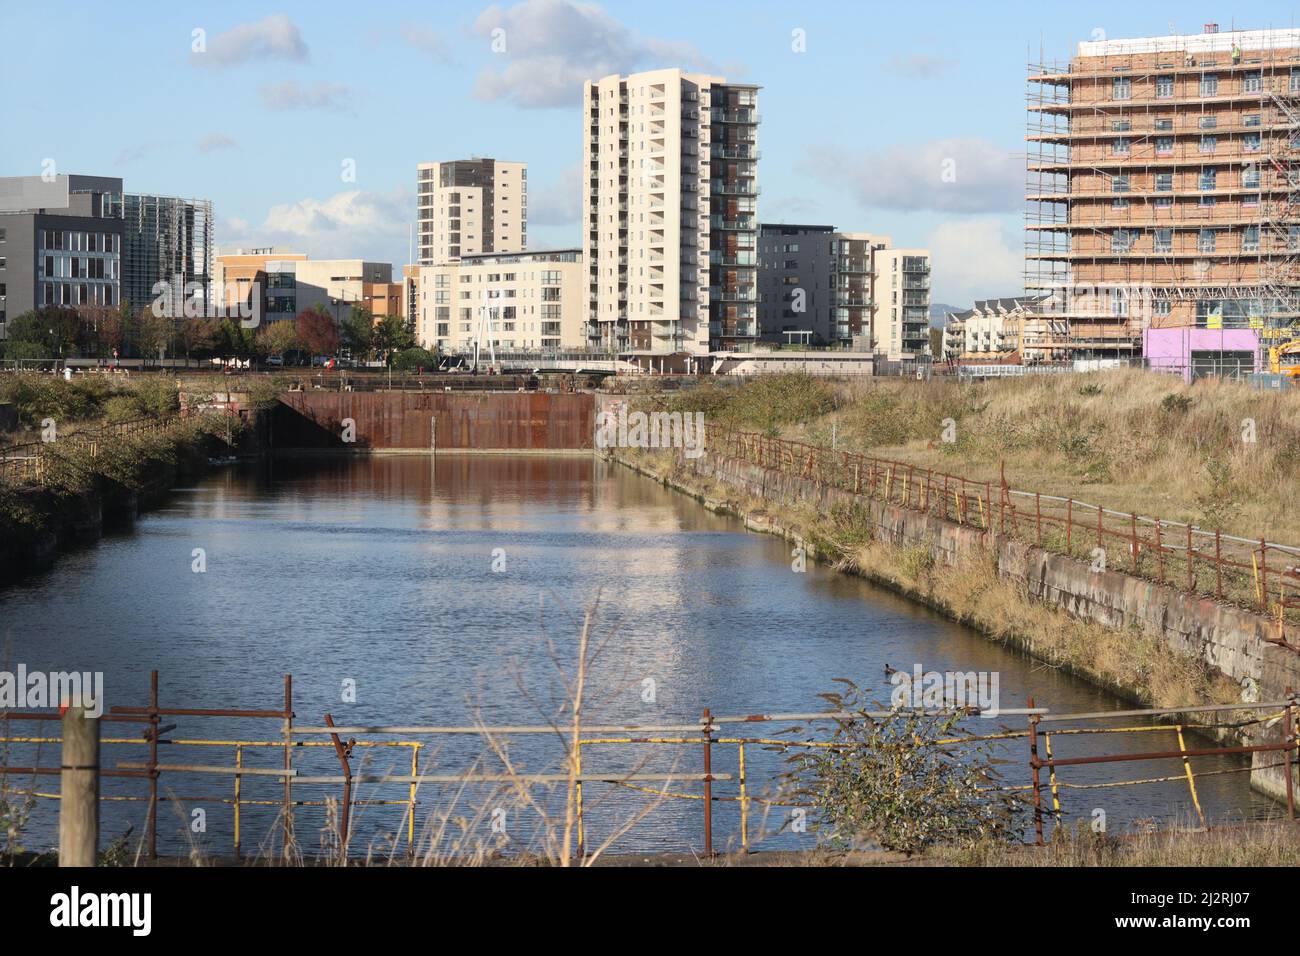 Disused graving dock basin awaiting redevelopment, Cardiff Bay Wales UK. Housing blocks in background Stock Photo